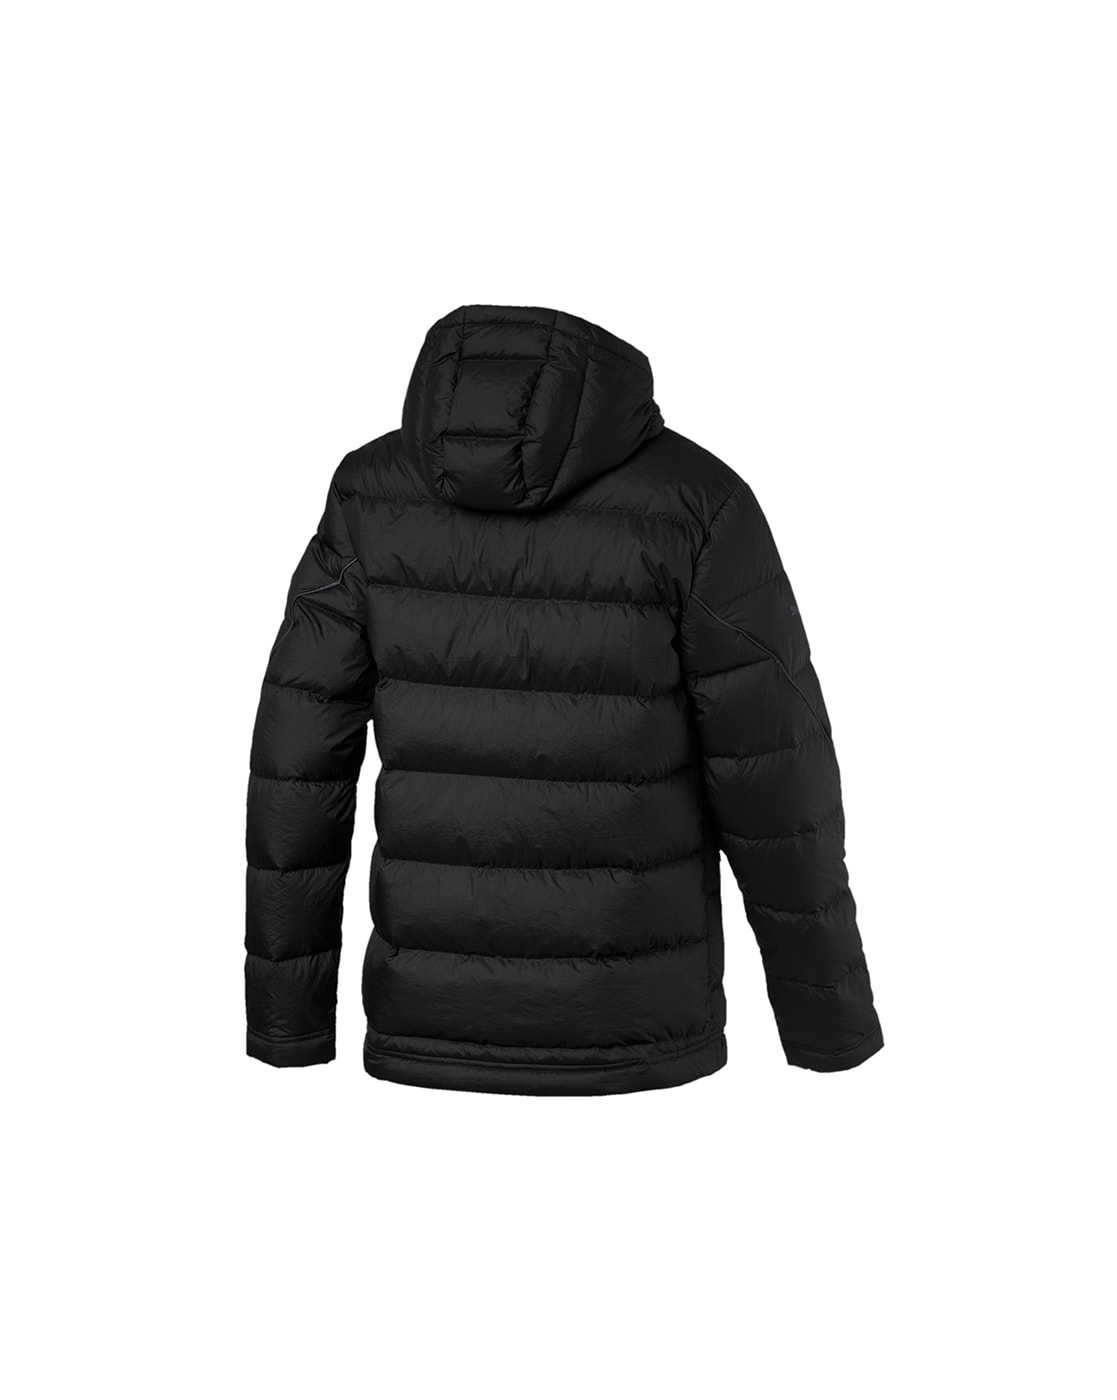 puma jackets on sale online